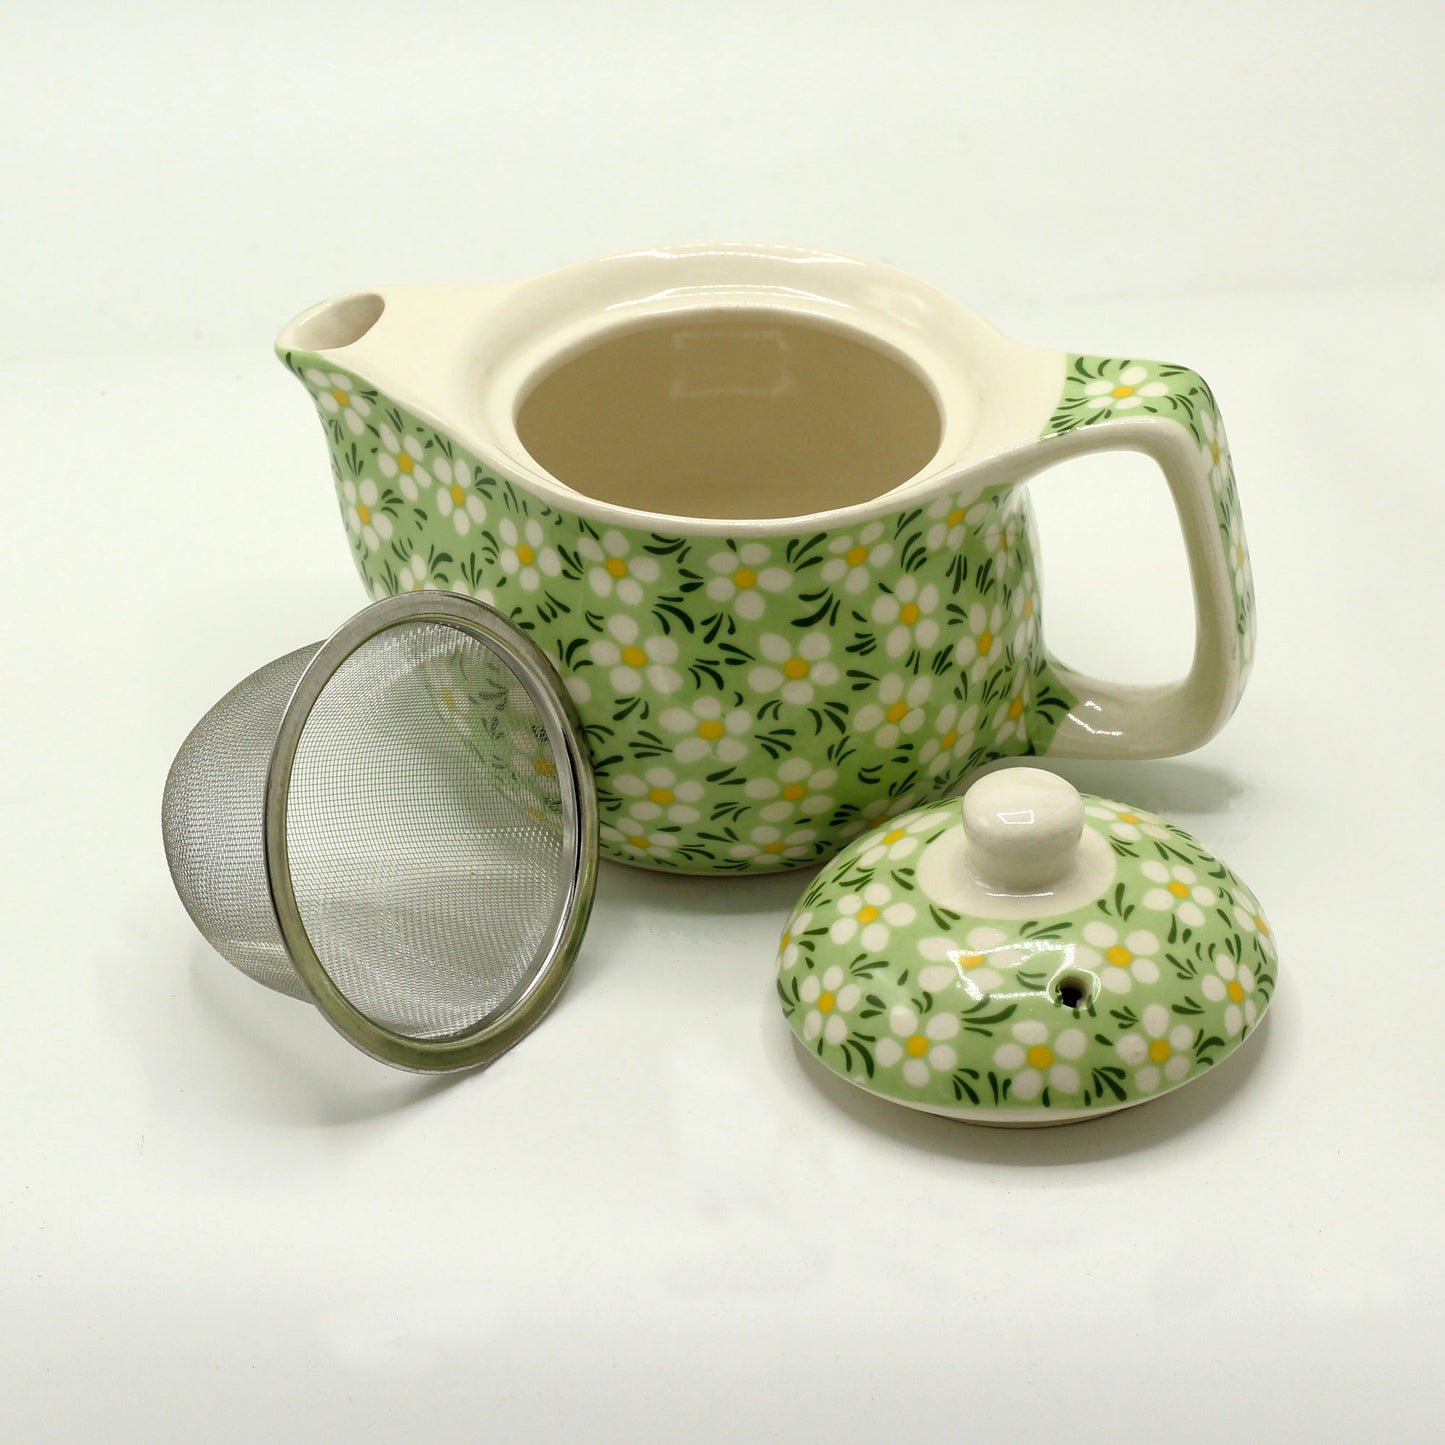 Herbal Teapot - Green Daisy